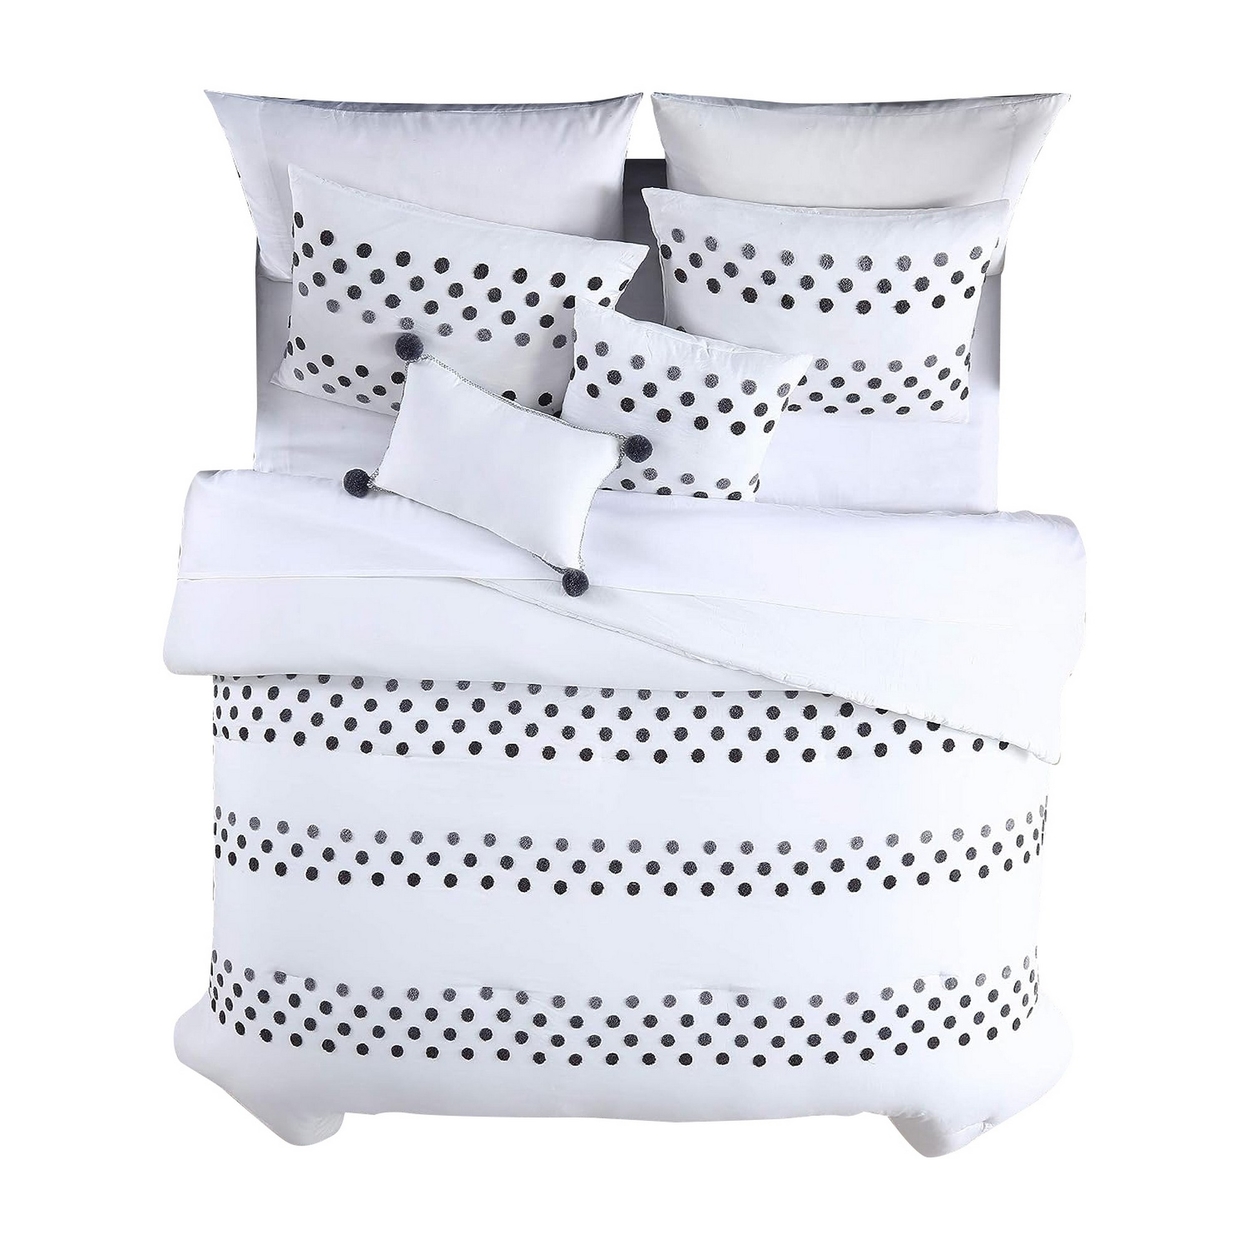 Ari 5pc King Comforter Set, Polka Dots, White And Gray By The Urban Port- Saltoro Sherpi